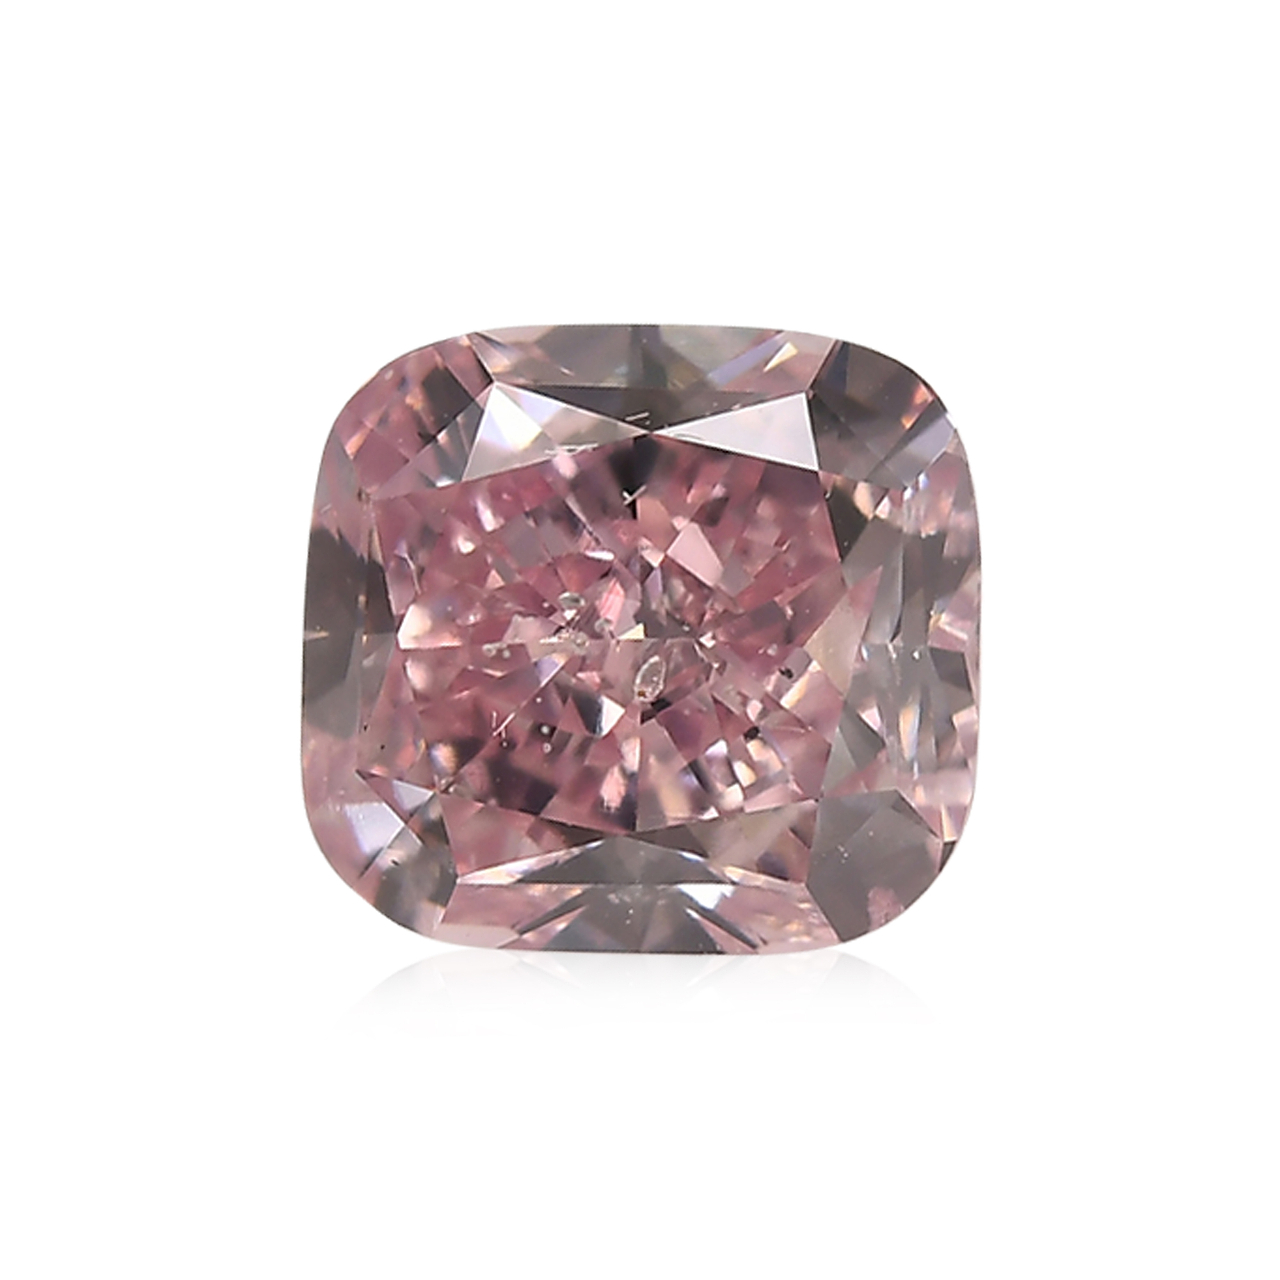 3.83 carat, Fancy Intense Purplish Pink Diamond, Cushion Shape